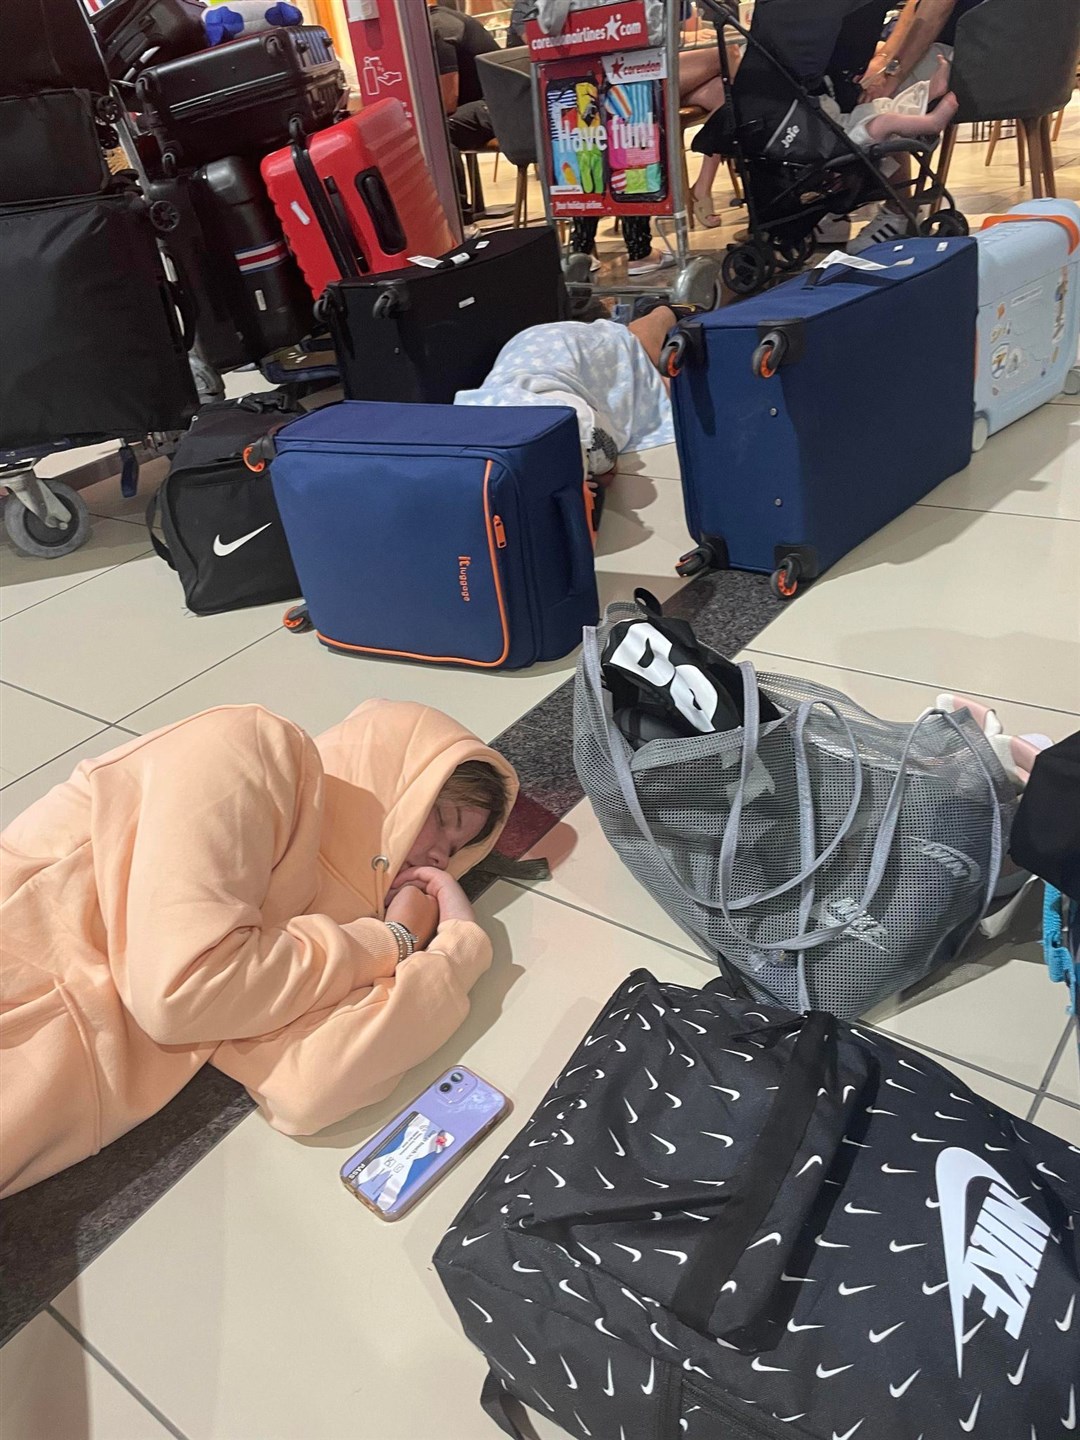 People sleeping on the floor in the airport.